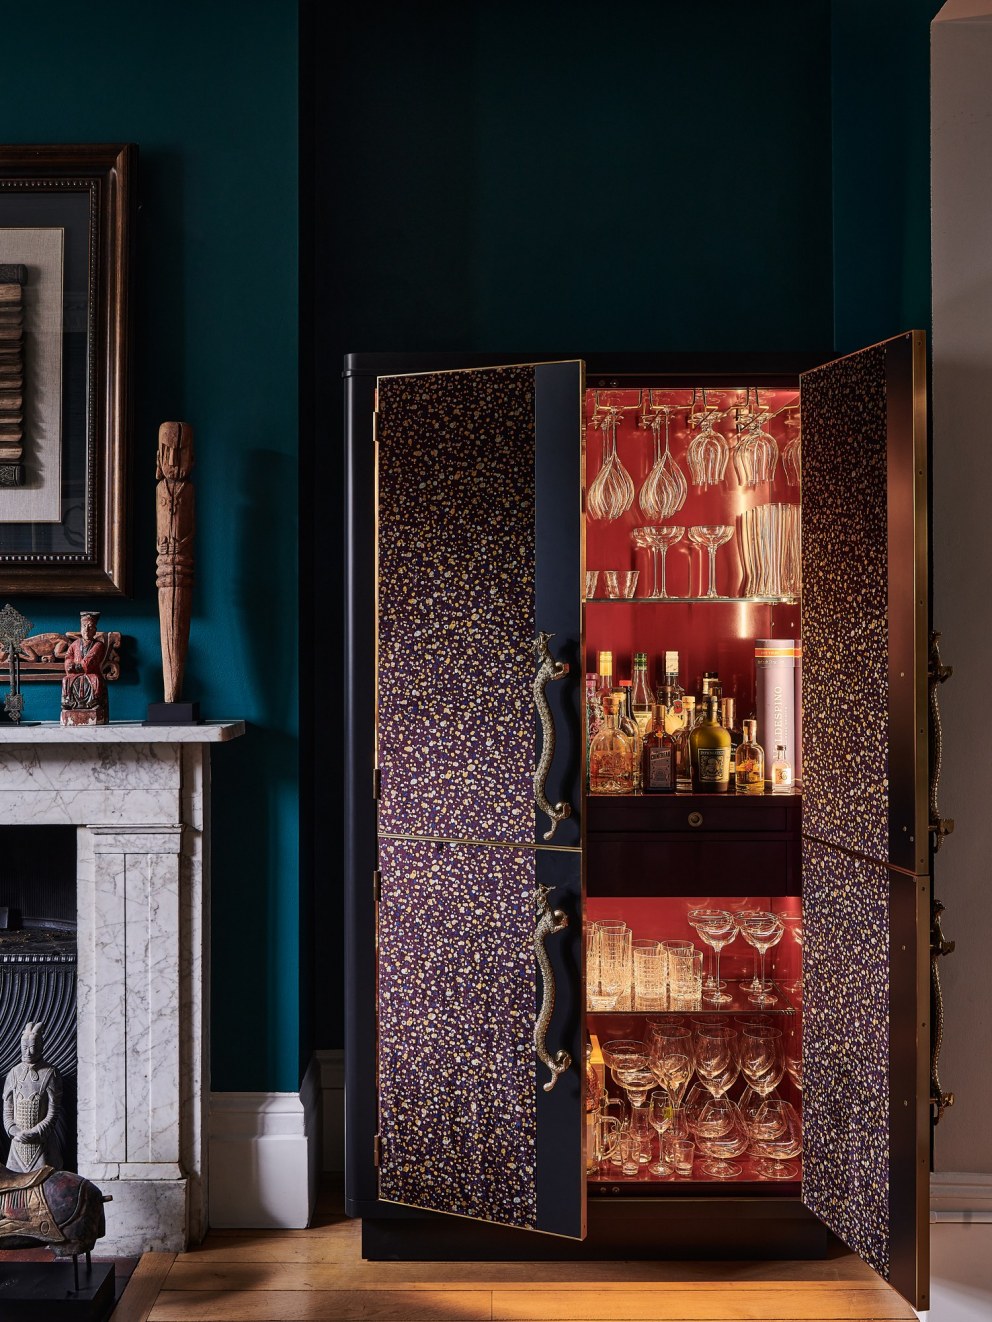 Notting Hill Town House  | Bespoke Bar interior | Interior Designers